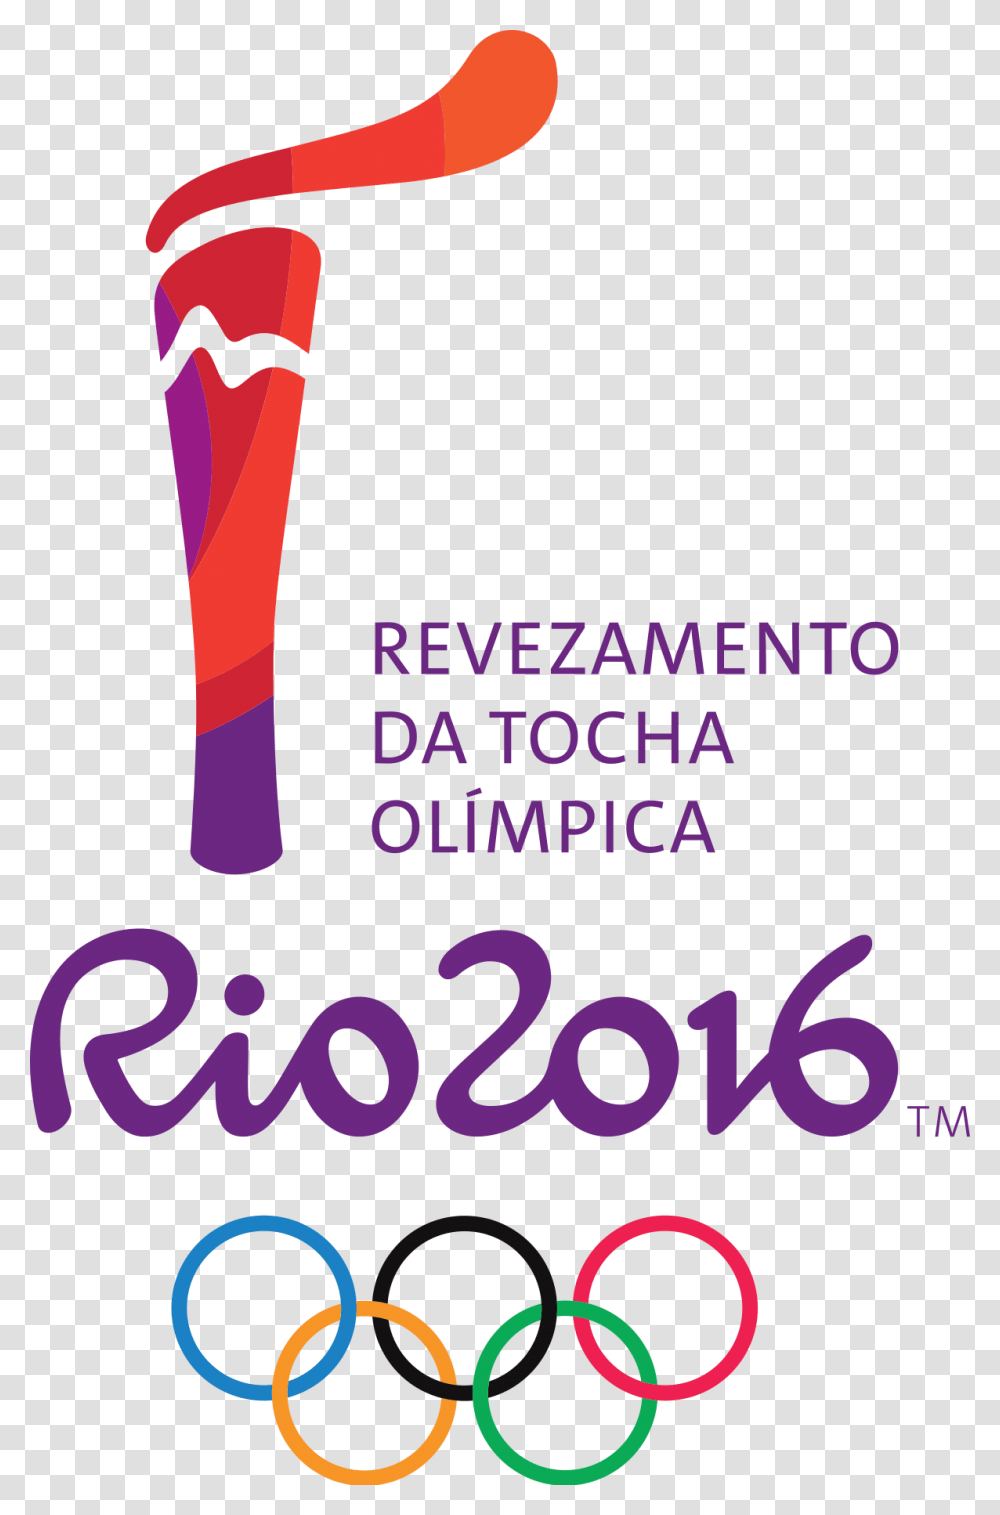 Rio 2016 olympic